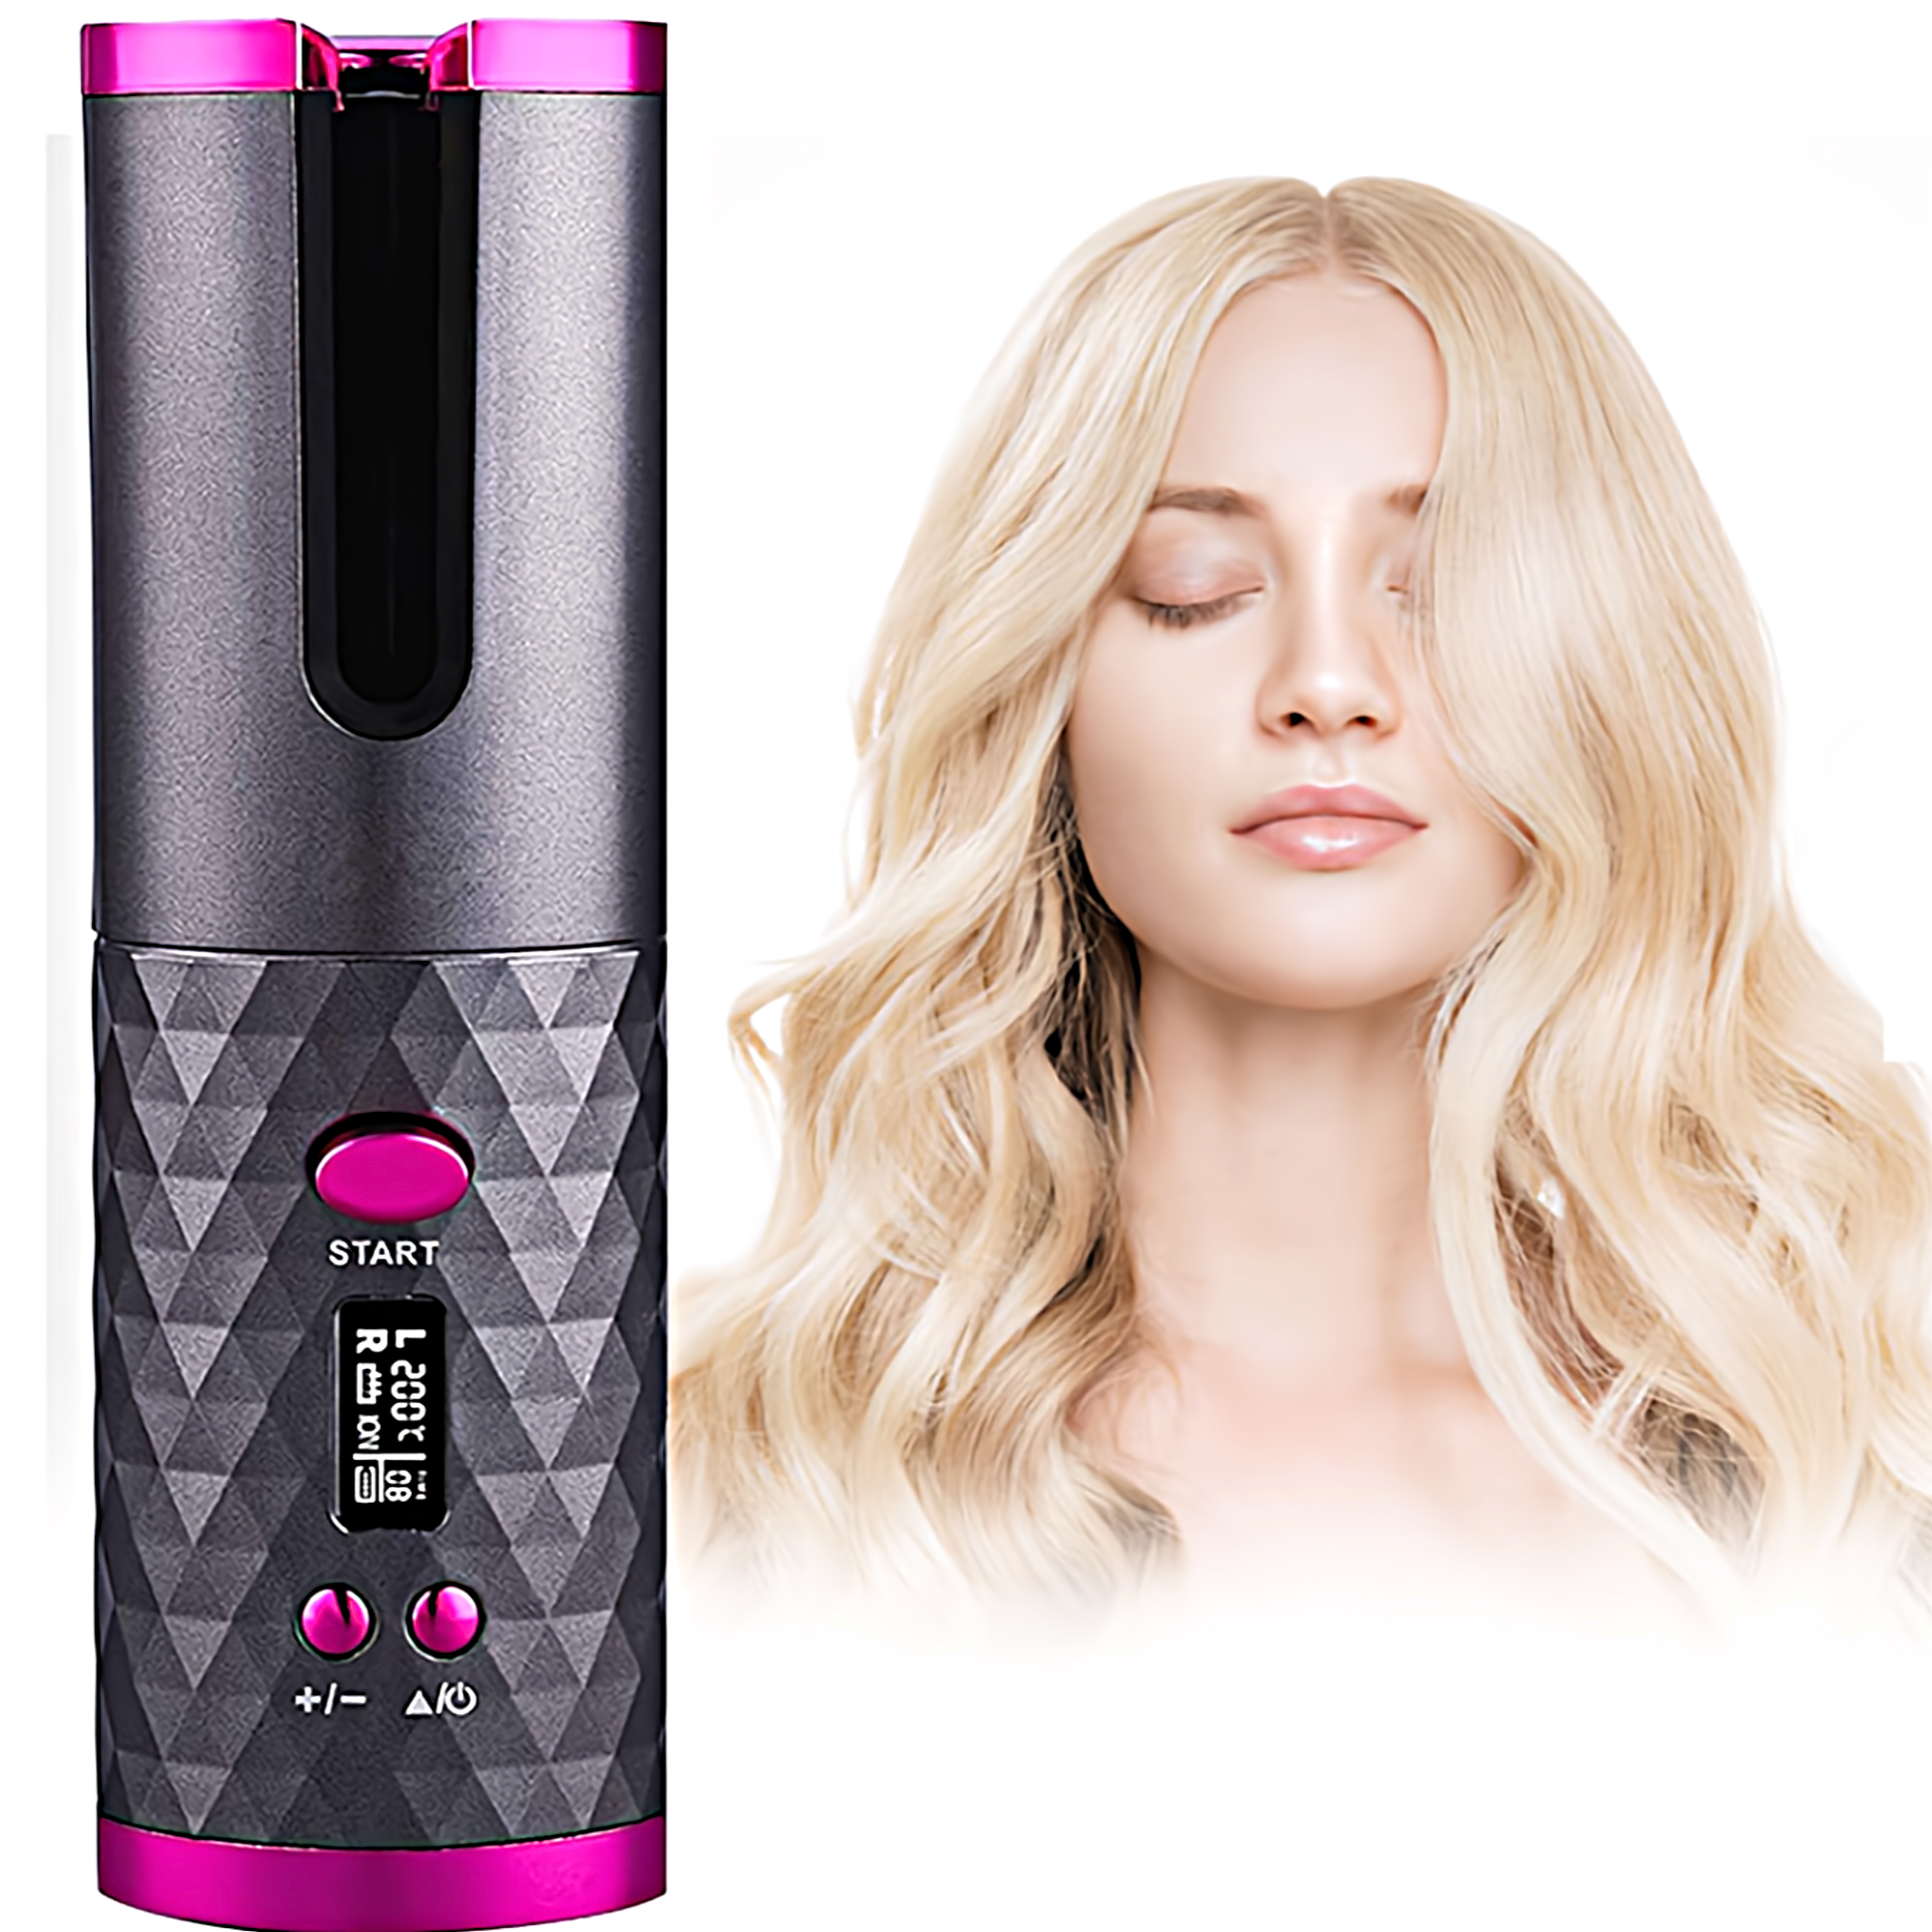 Wireless Hair Curler™ 25% OFF - BLISS & ME Beauty